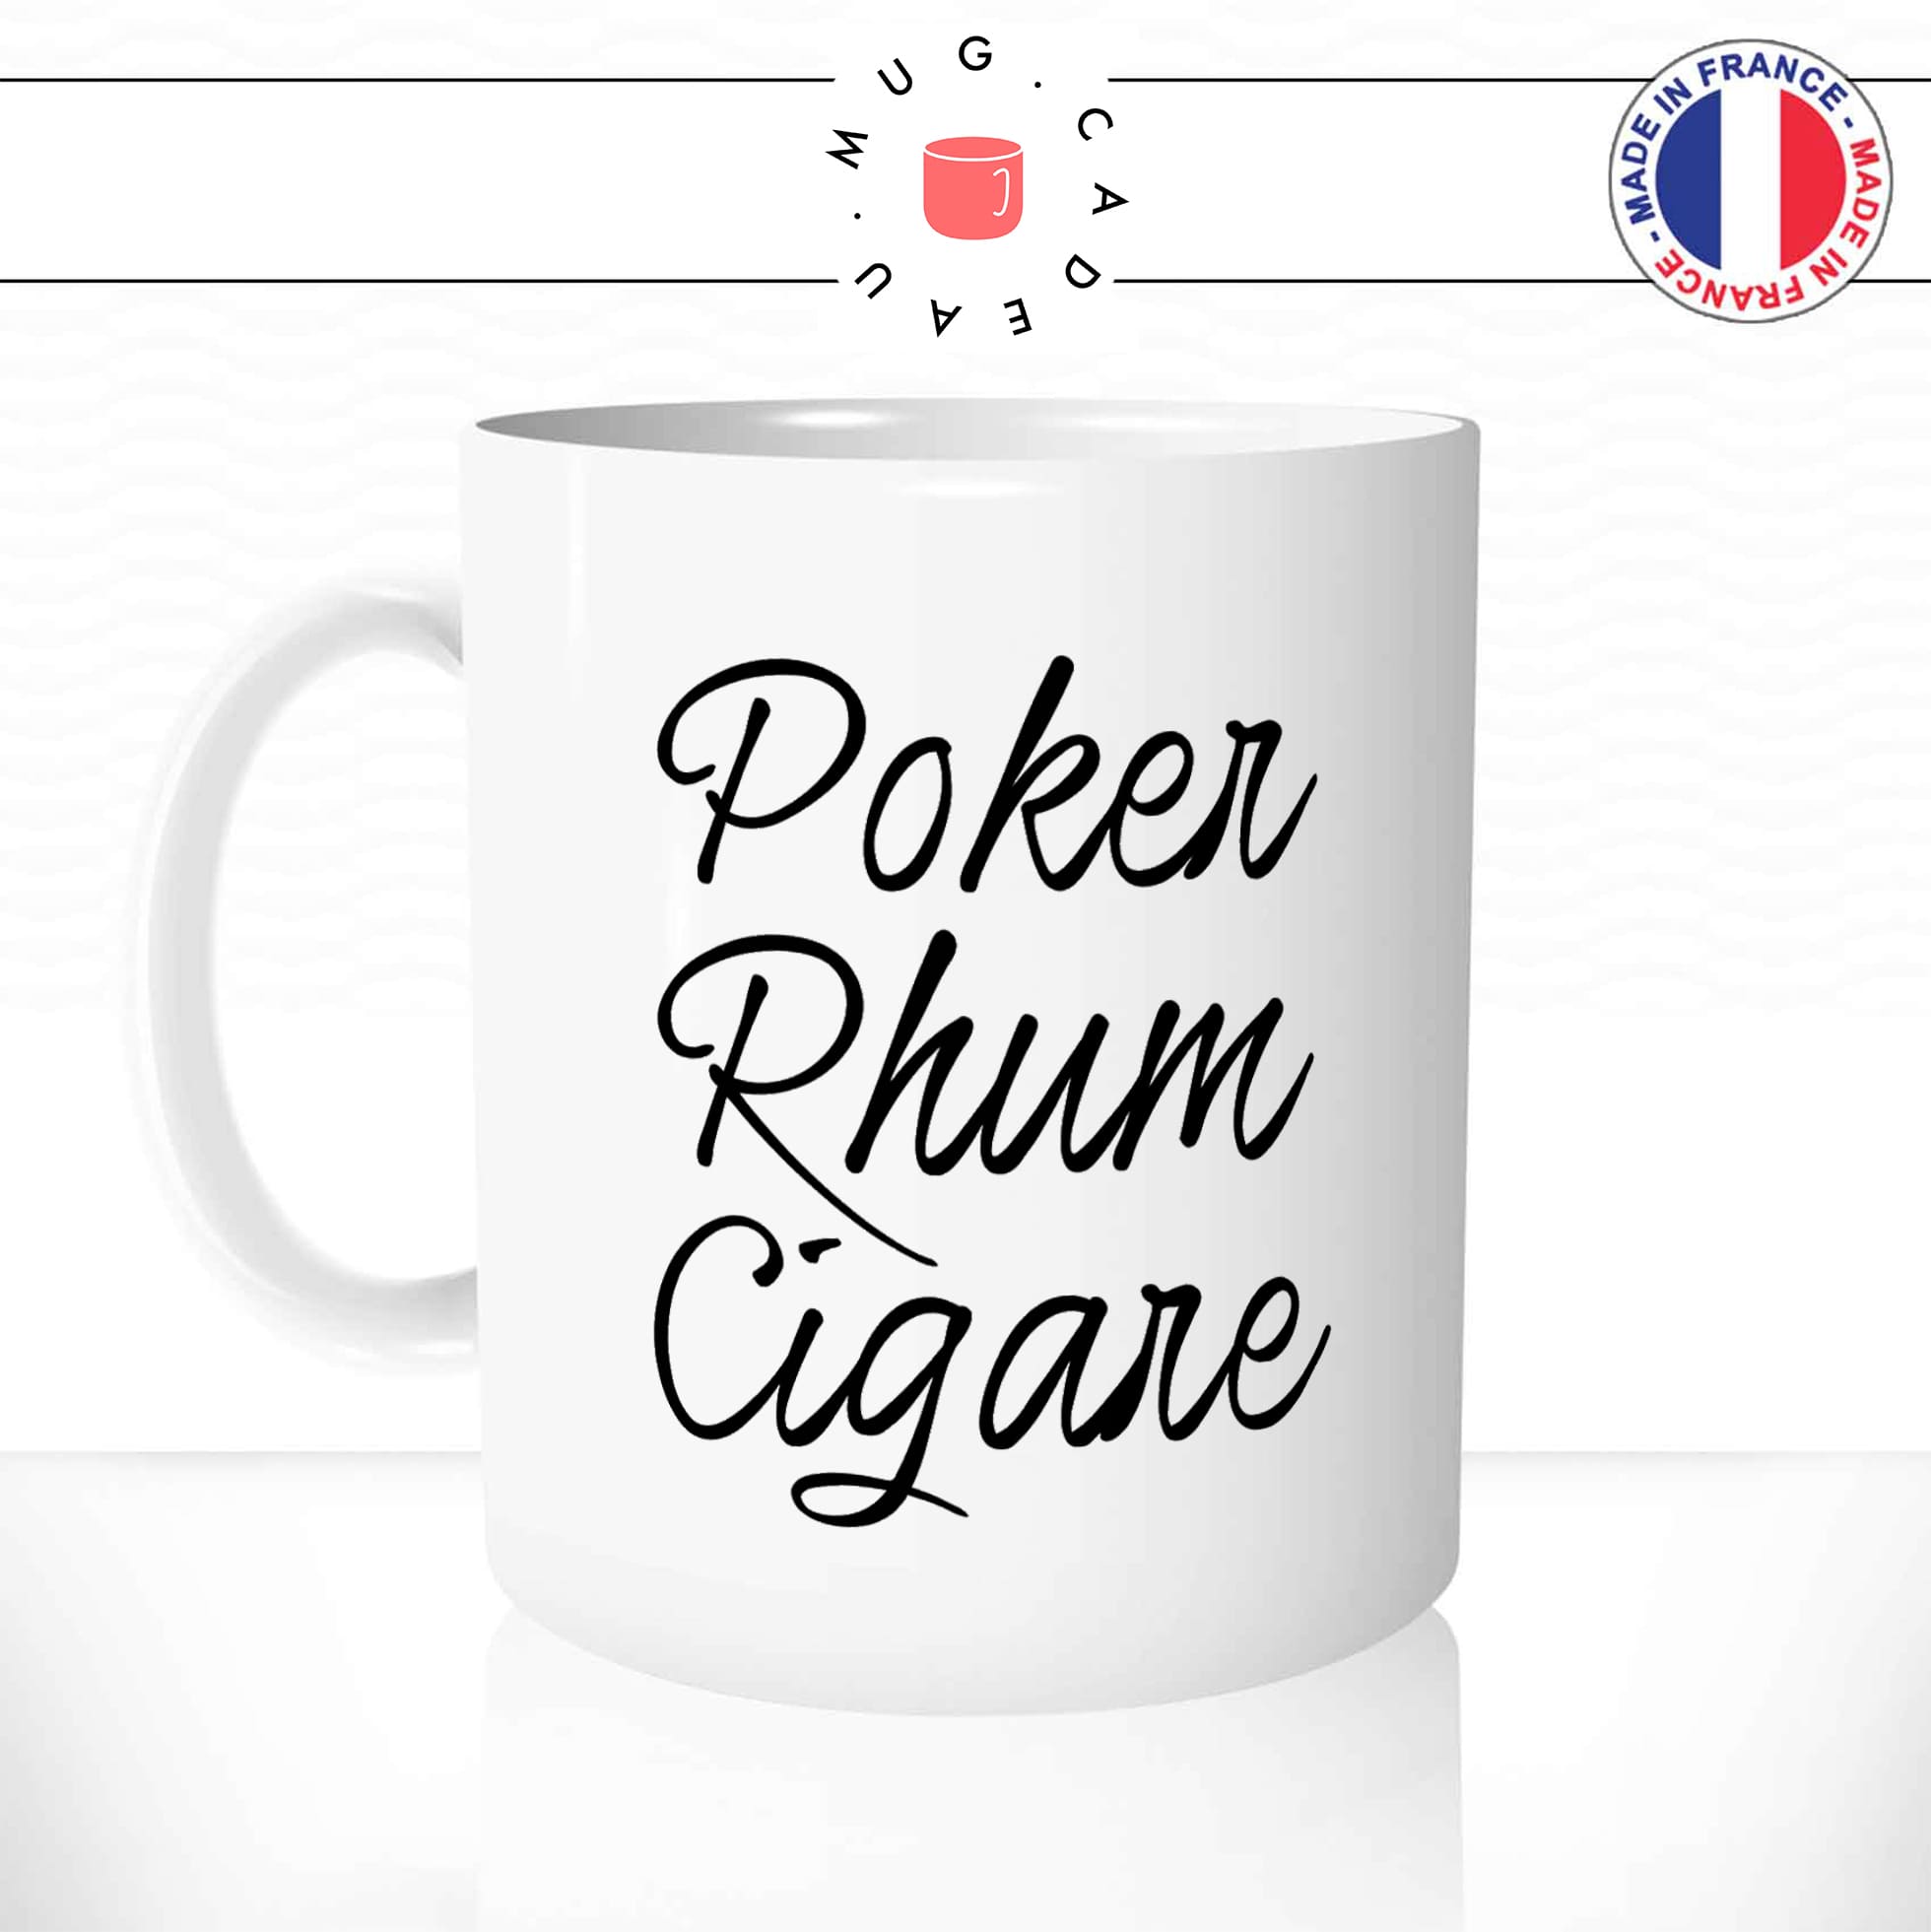 https://media.cdnws.com/_i/189179/12074/2289/74/mug-tasse-blanc-unique-poker-rhum-cigare-bonhomme-mec-homme-cubain-bluff-humour-fun-cool-idee-cadeau-original-personnalise.jpeg